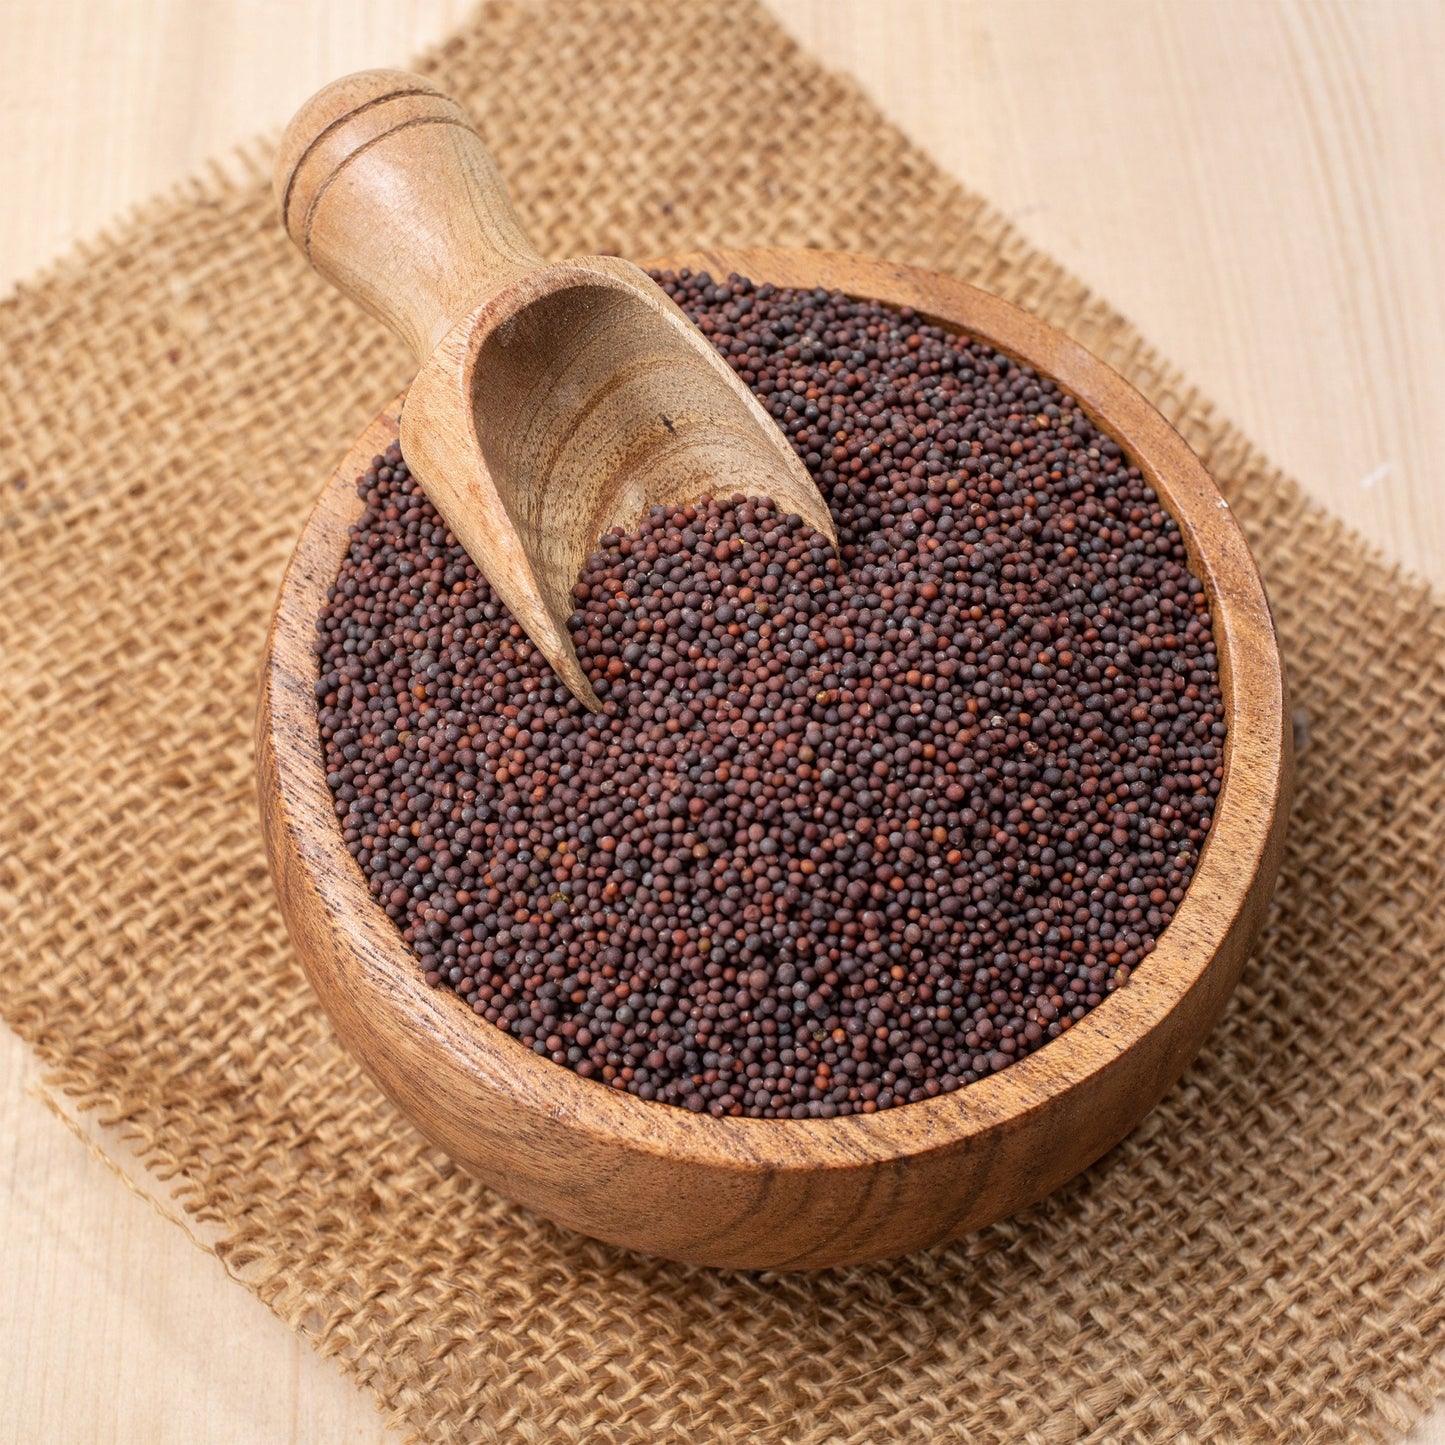 Andhra Mustard Seeds